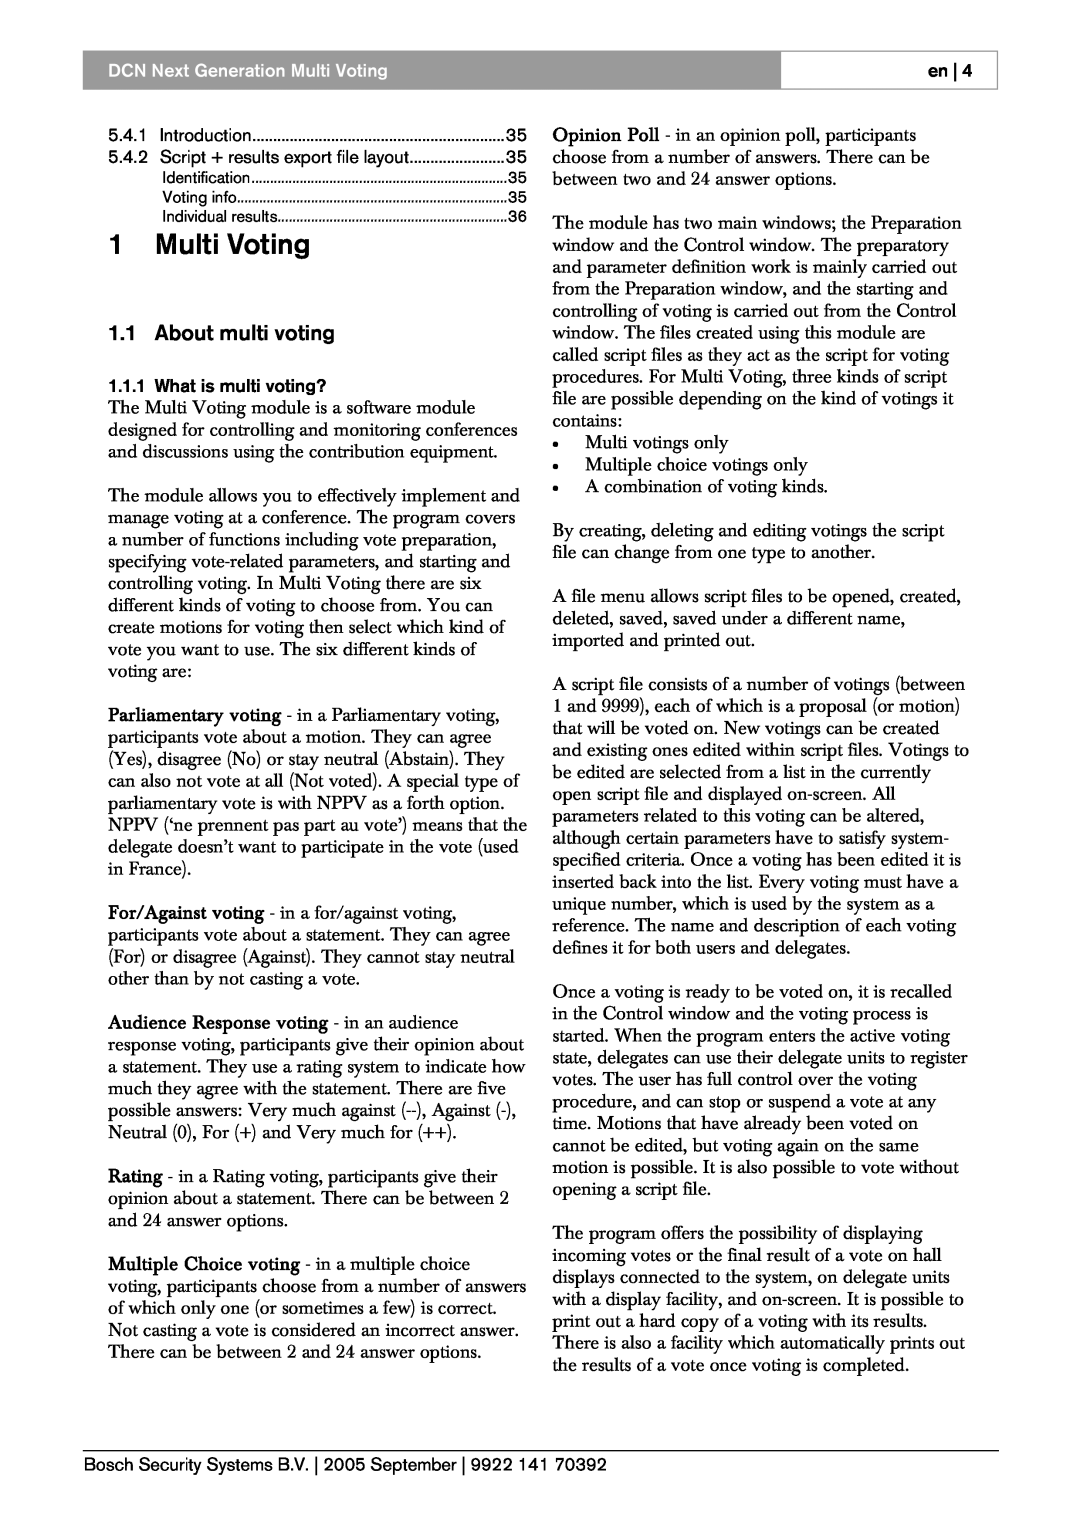 Bosch Appliances LBB 4176 user manual 1Multi Voting, About multi voting, DCN Next Generation Multi Voting 